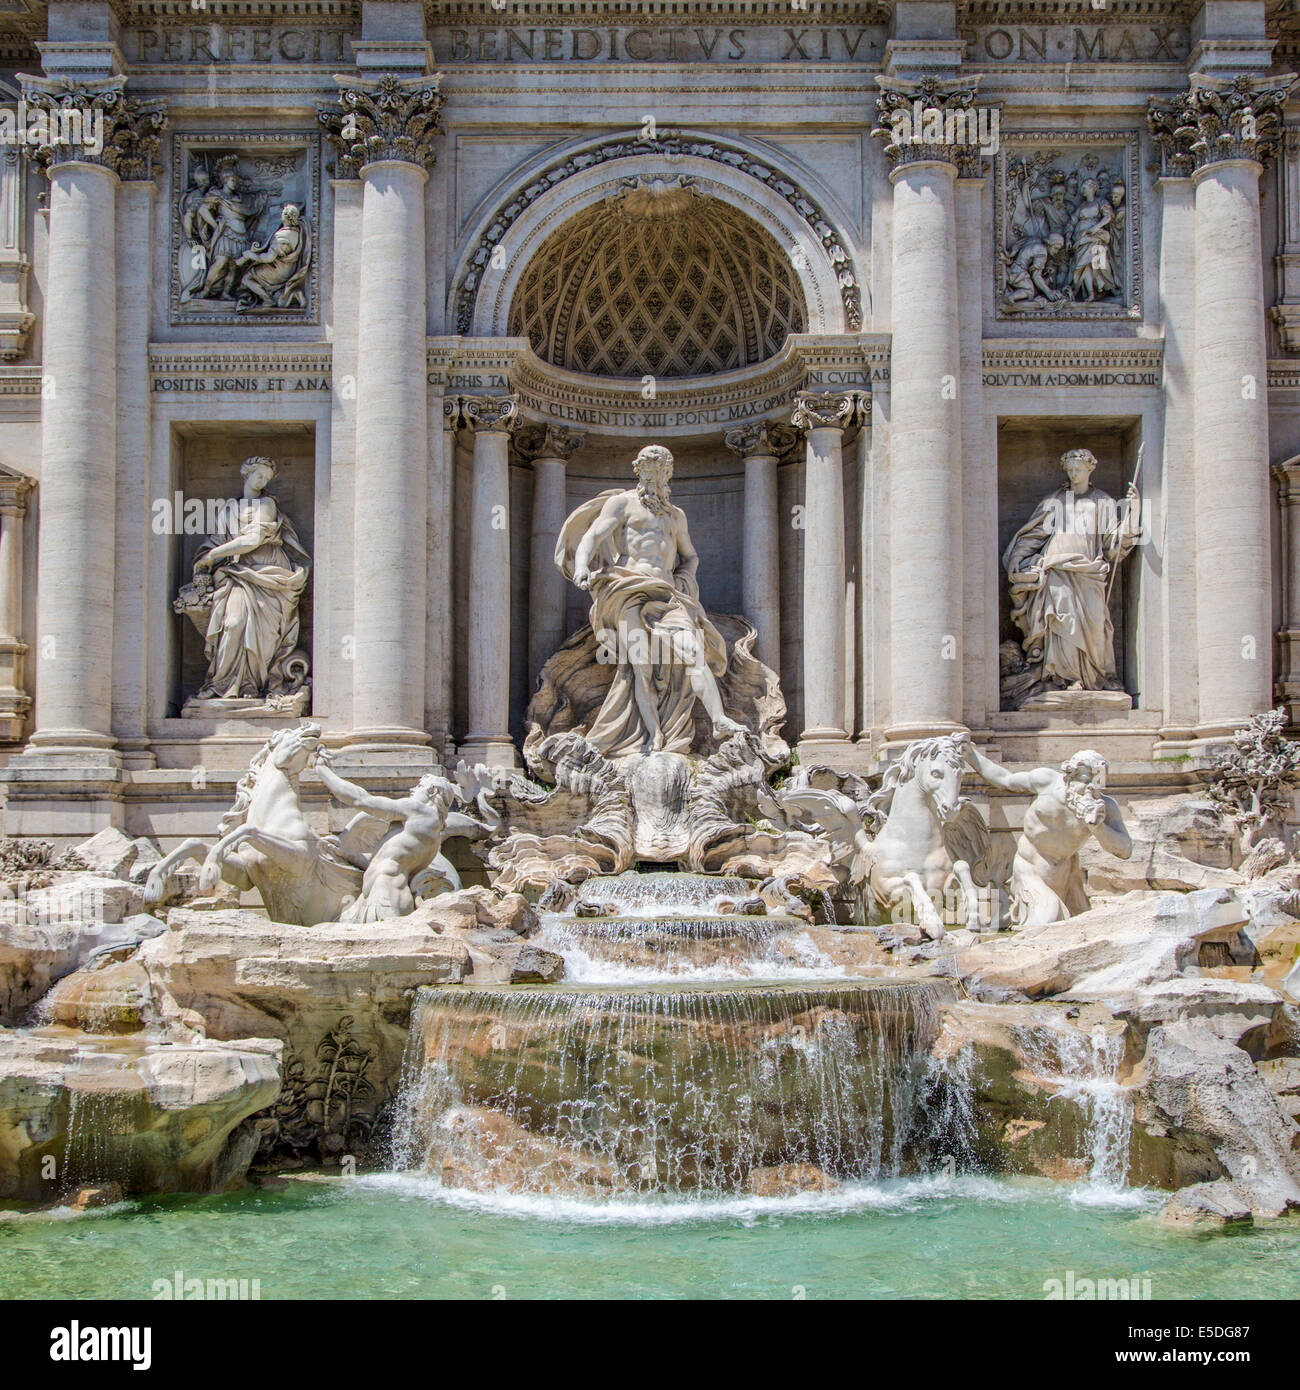 Trevi Fountain, Fontana di Trevi, Rome, Lazio, Italy Stock Photo